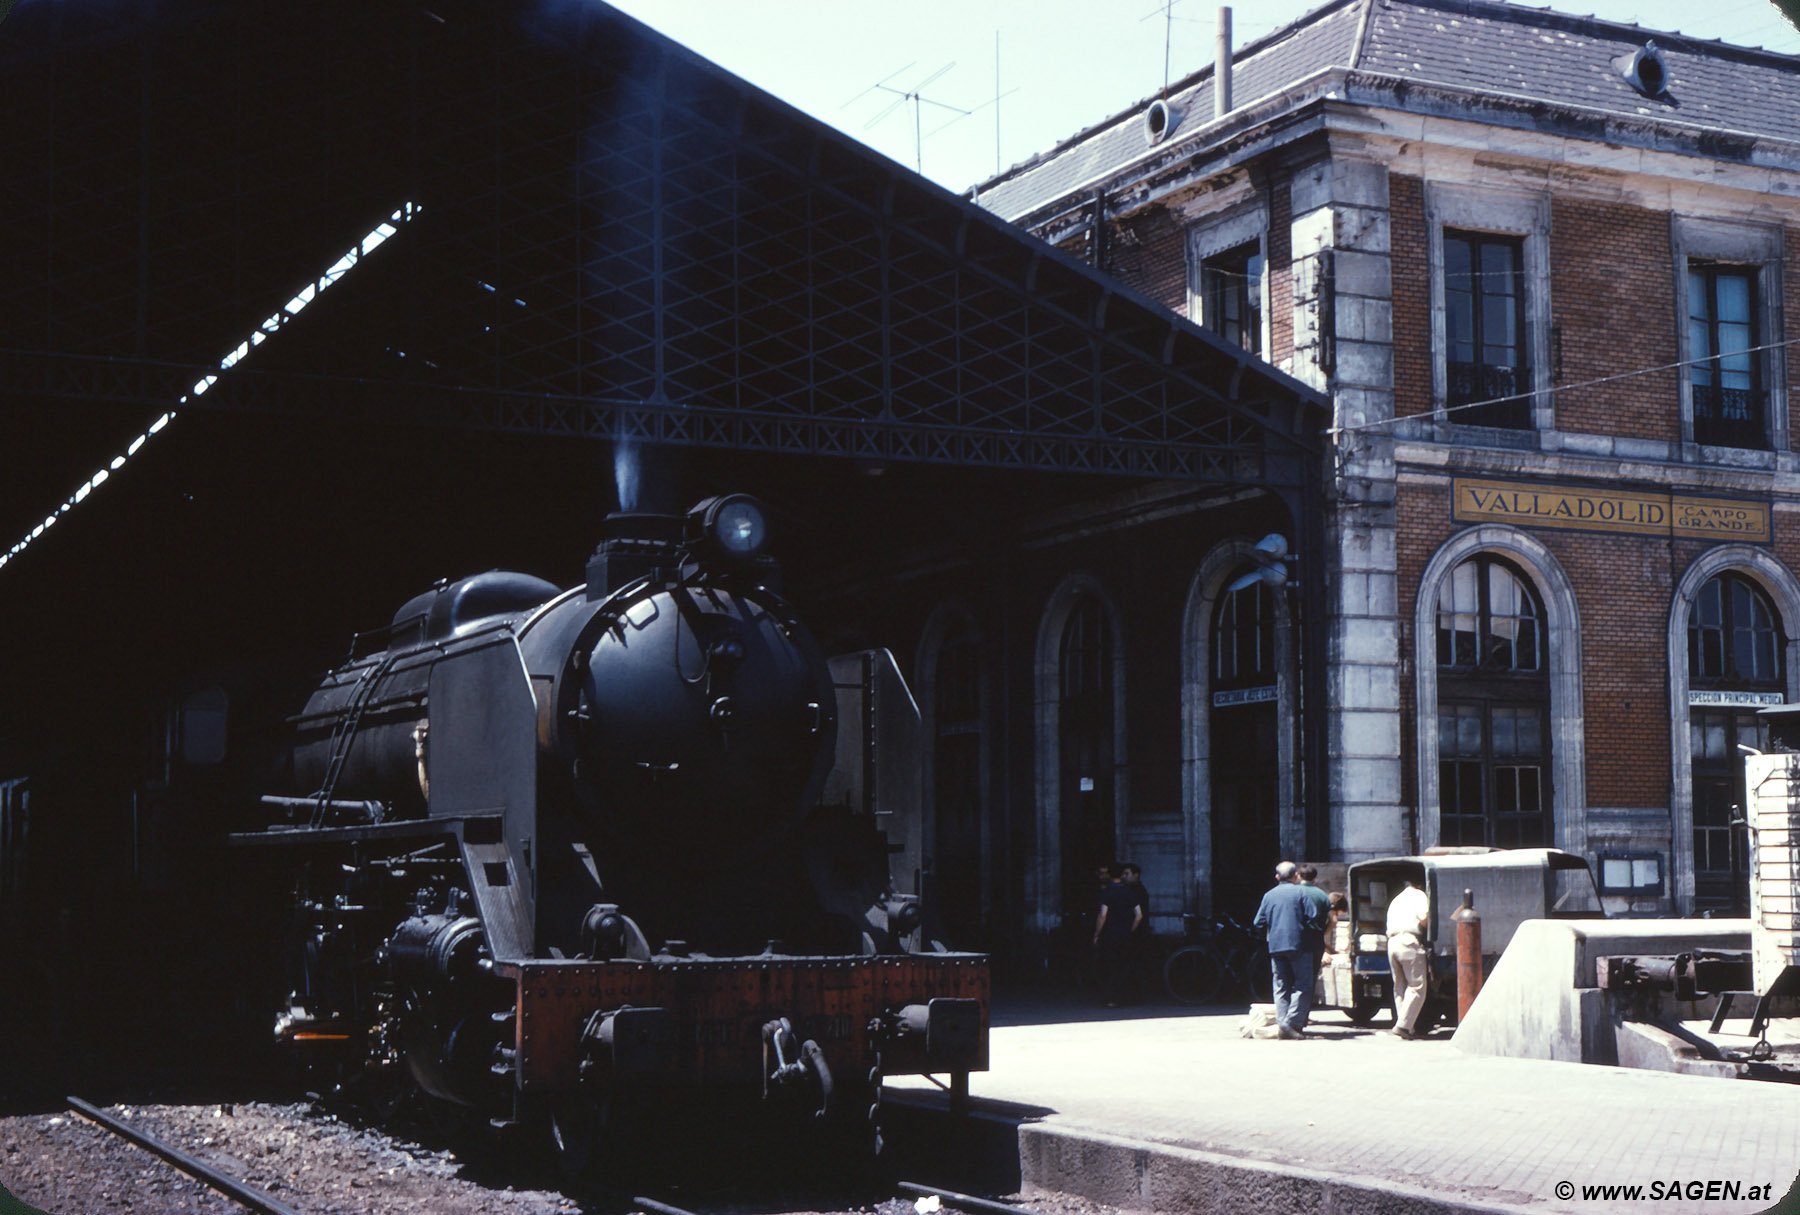 Dampflokomotive Valladolid